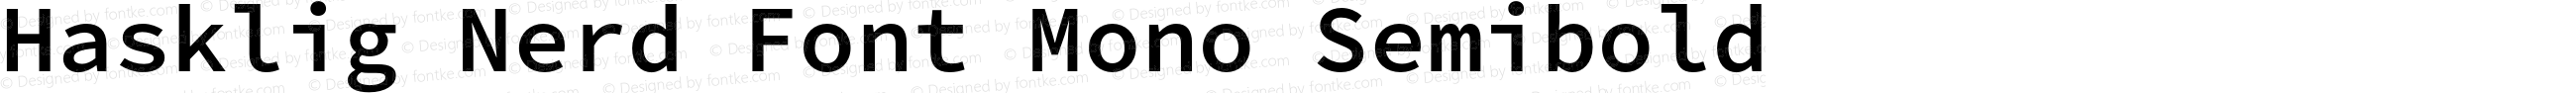 Hasklig Semibold Nerd Font Complete Mono